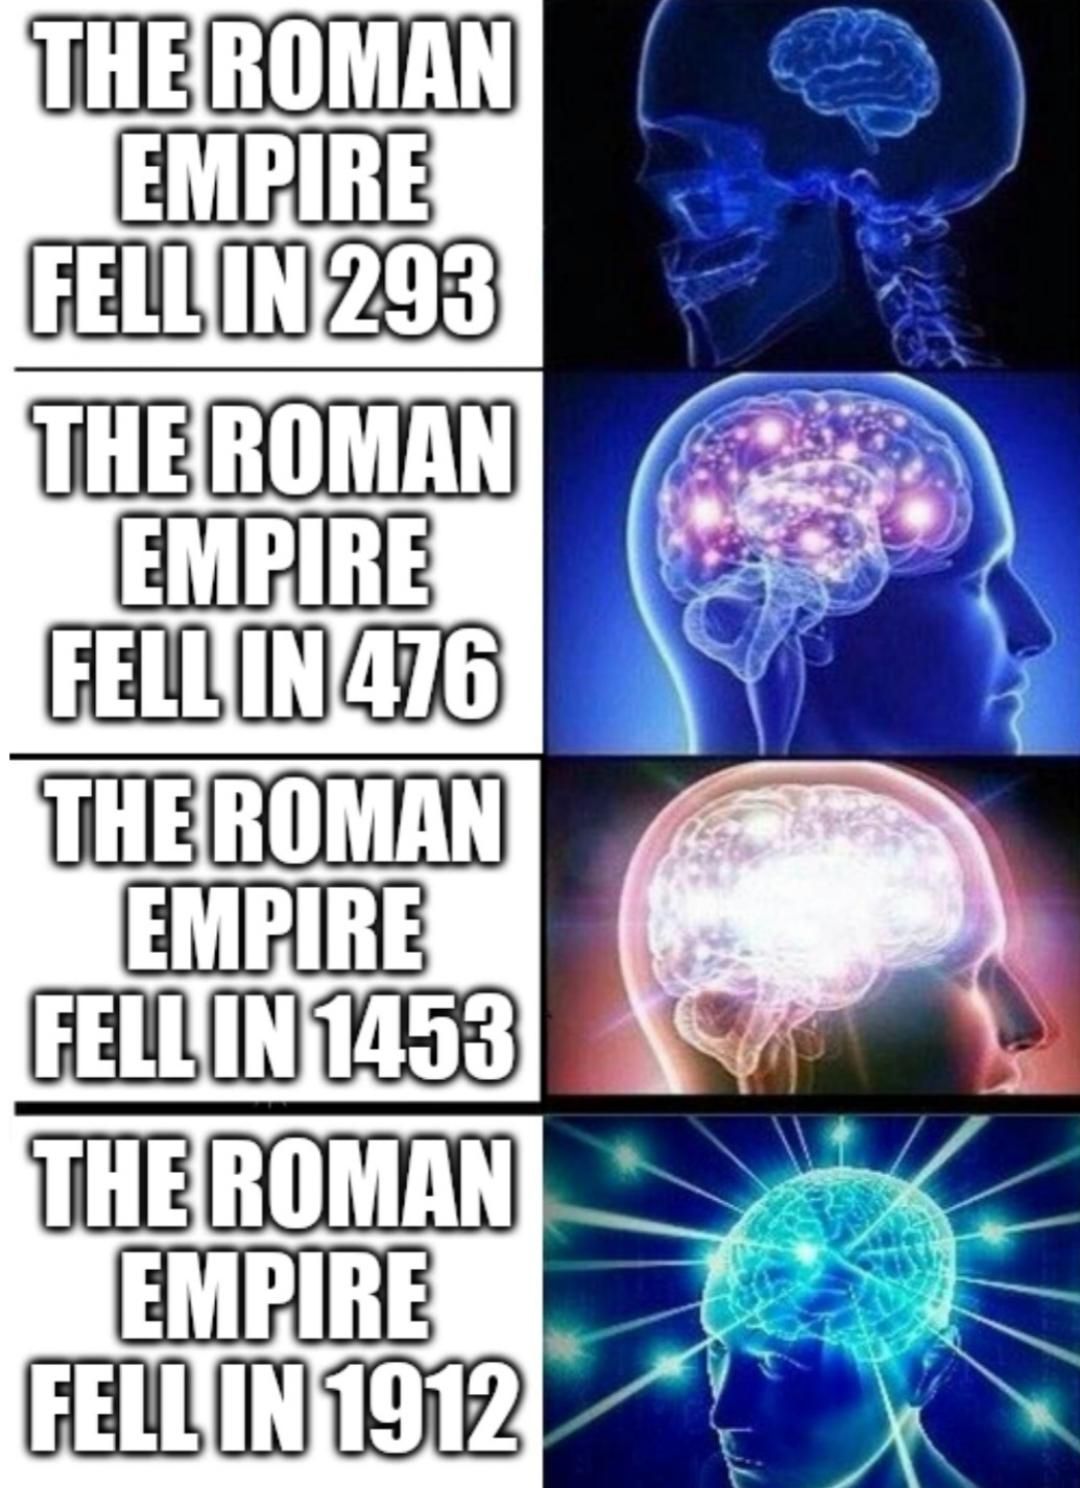 When did the Roman Empire truly fall?